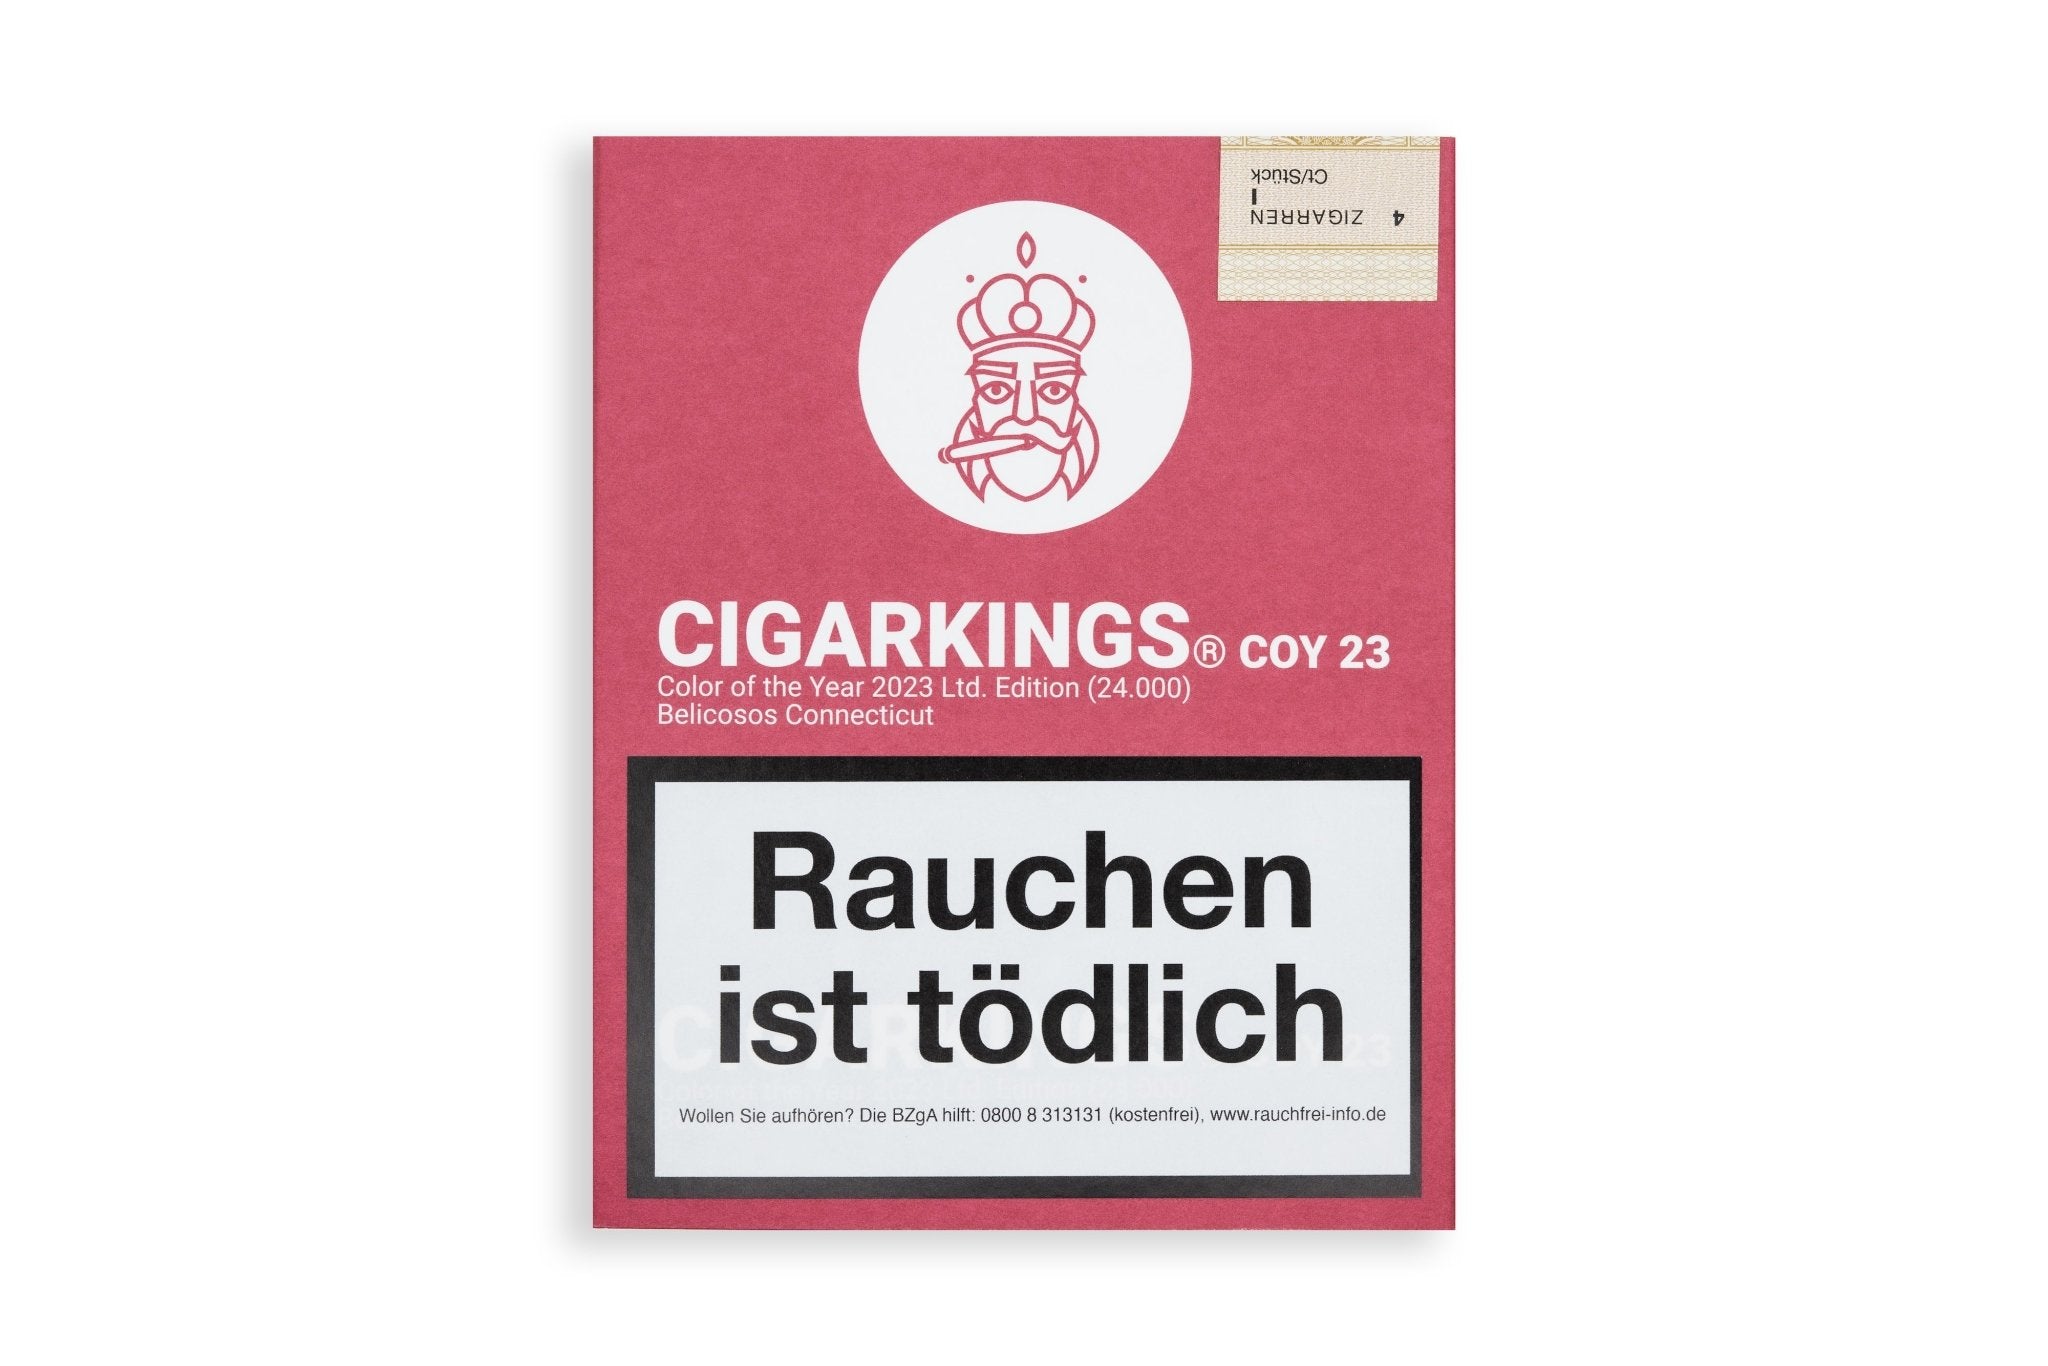 COY 23 Tubos - CigarKings GmbH